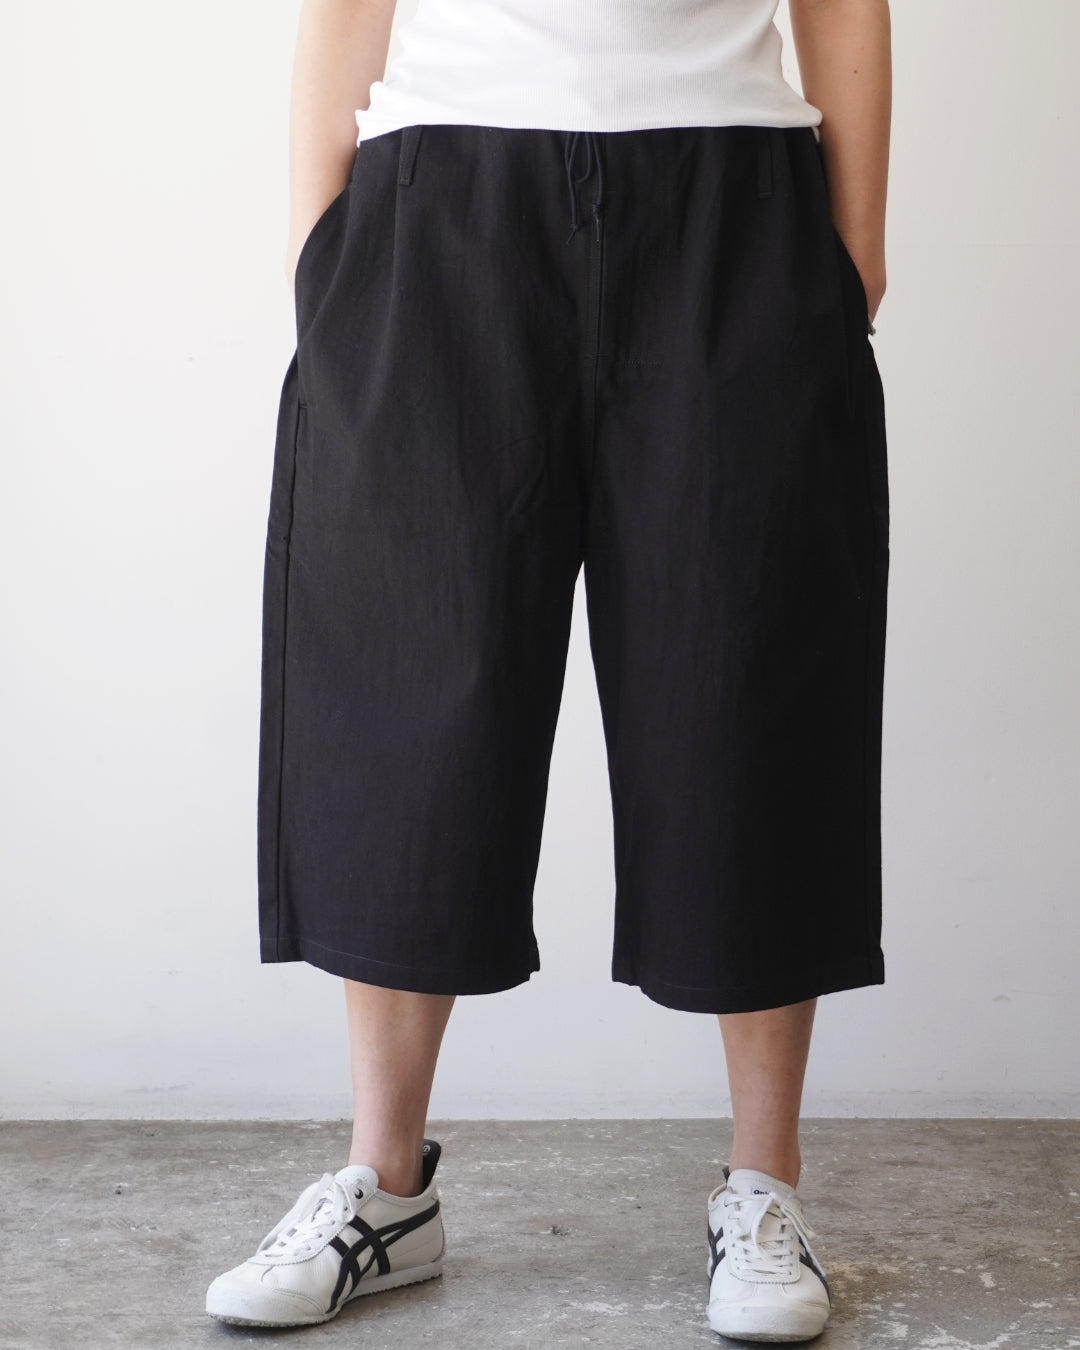 TUKI big shorts / blue black / high count denim / size4